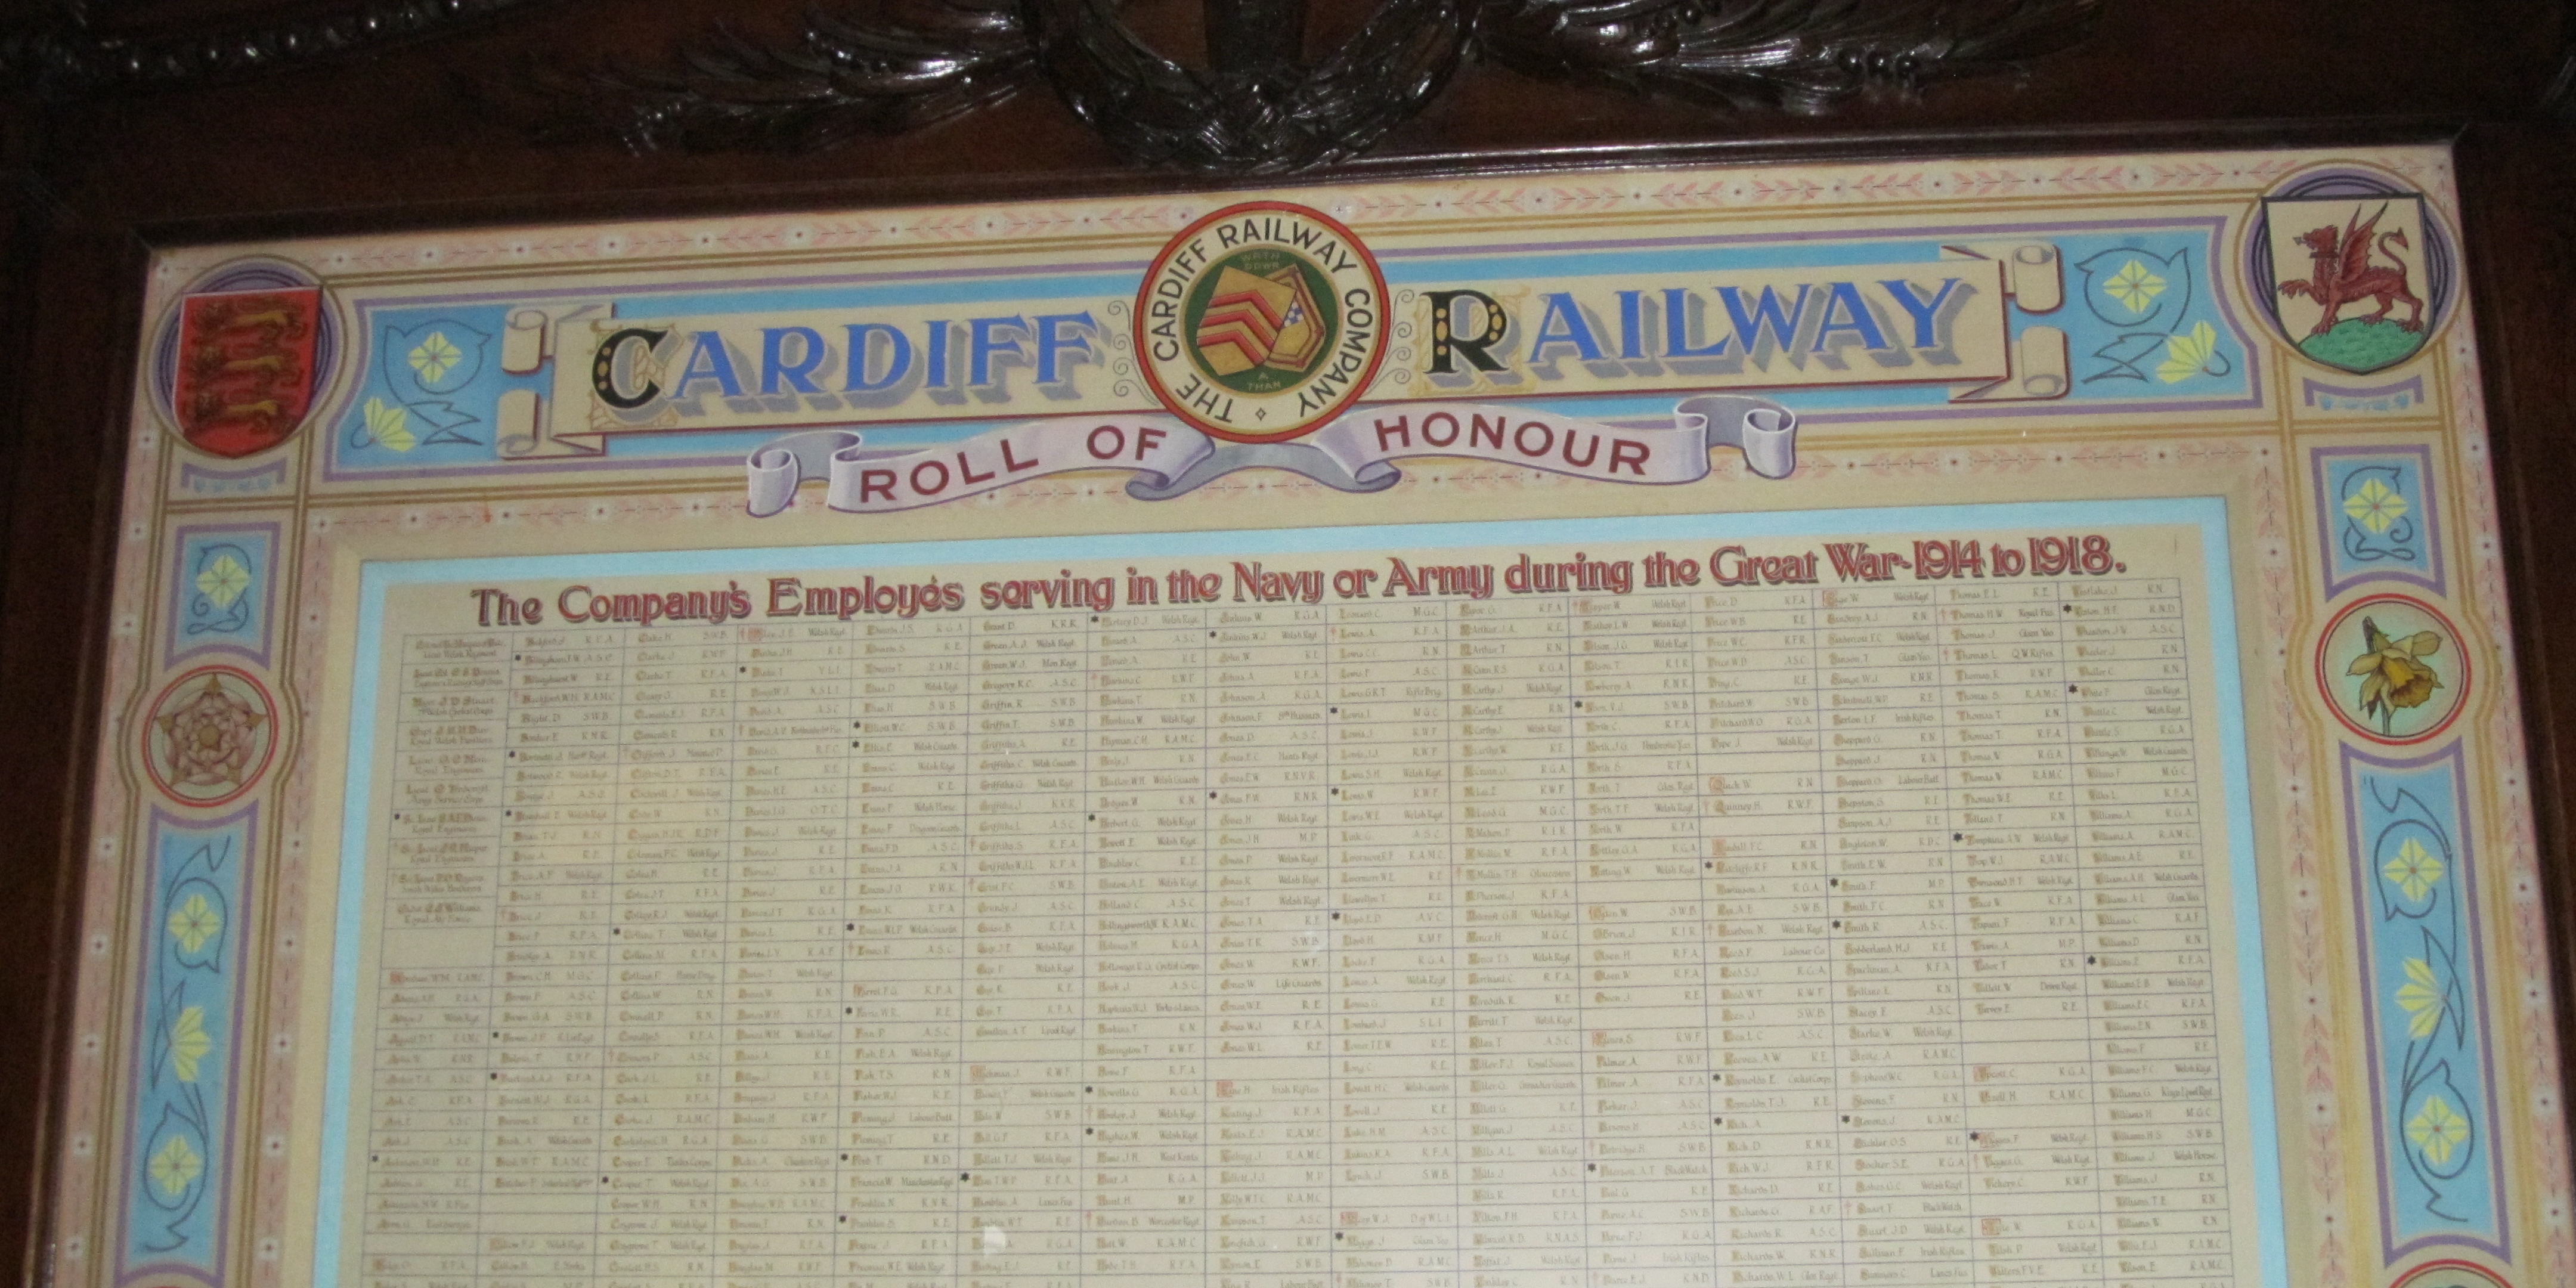 Cardiff Railway Roll of Honour